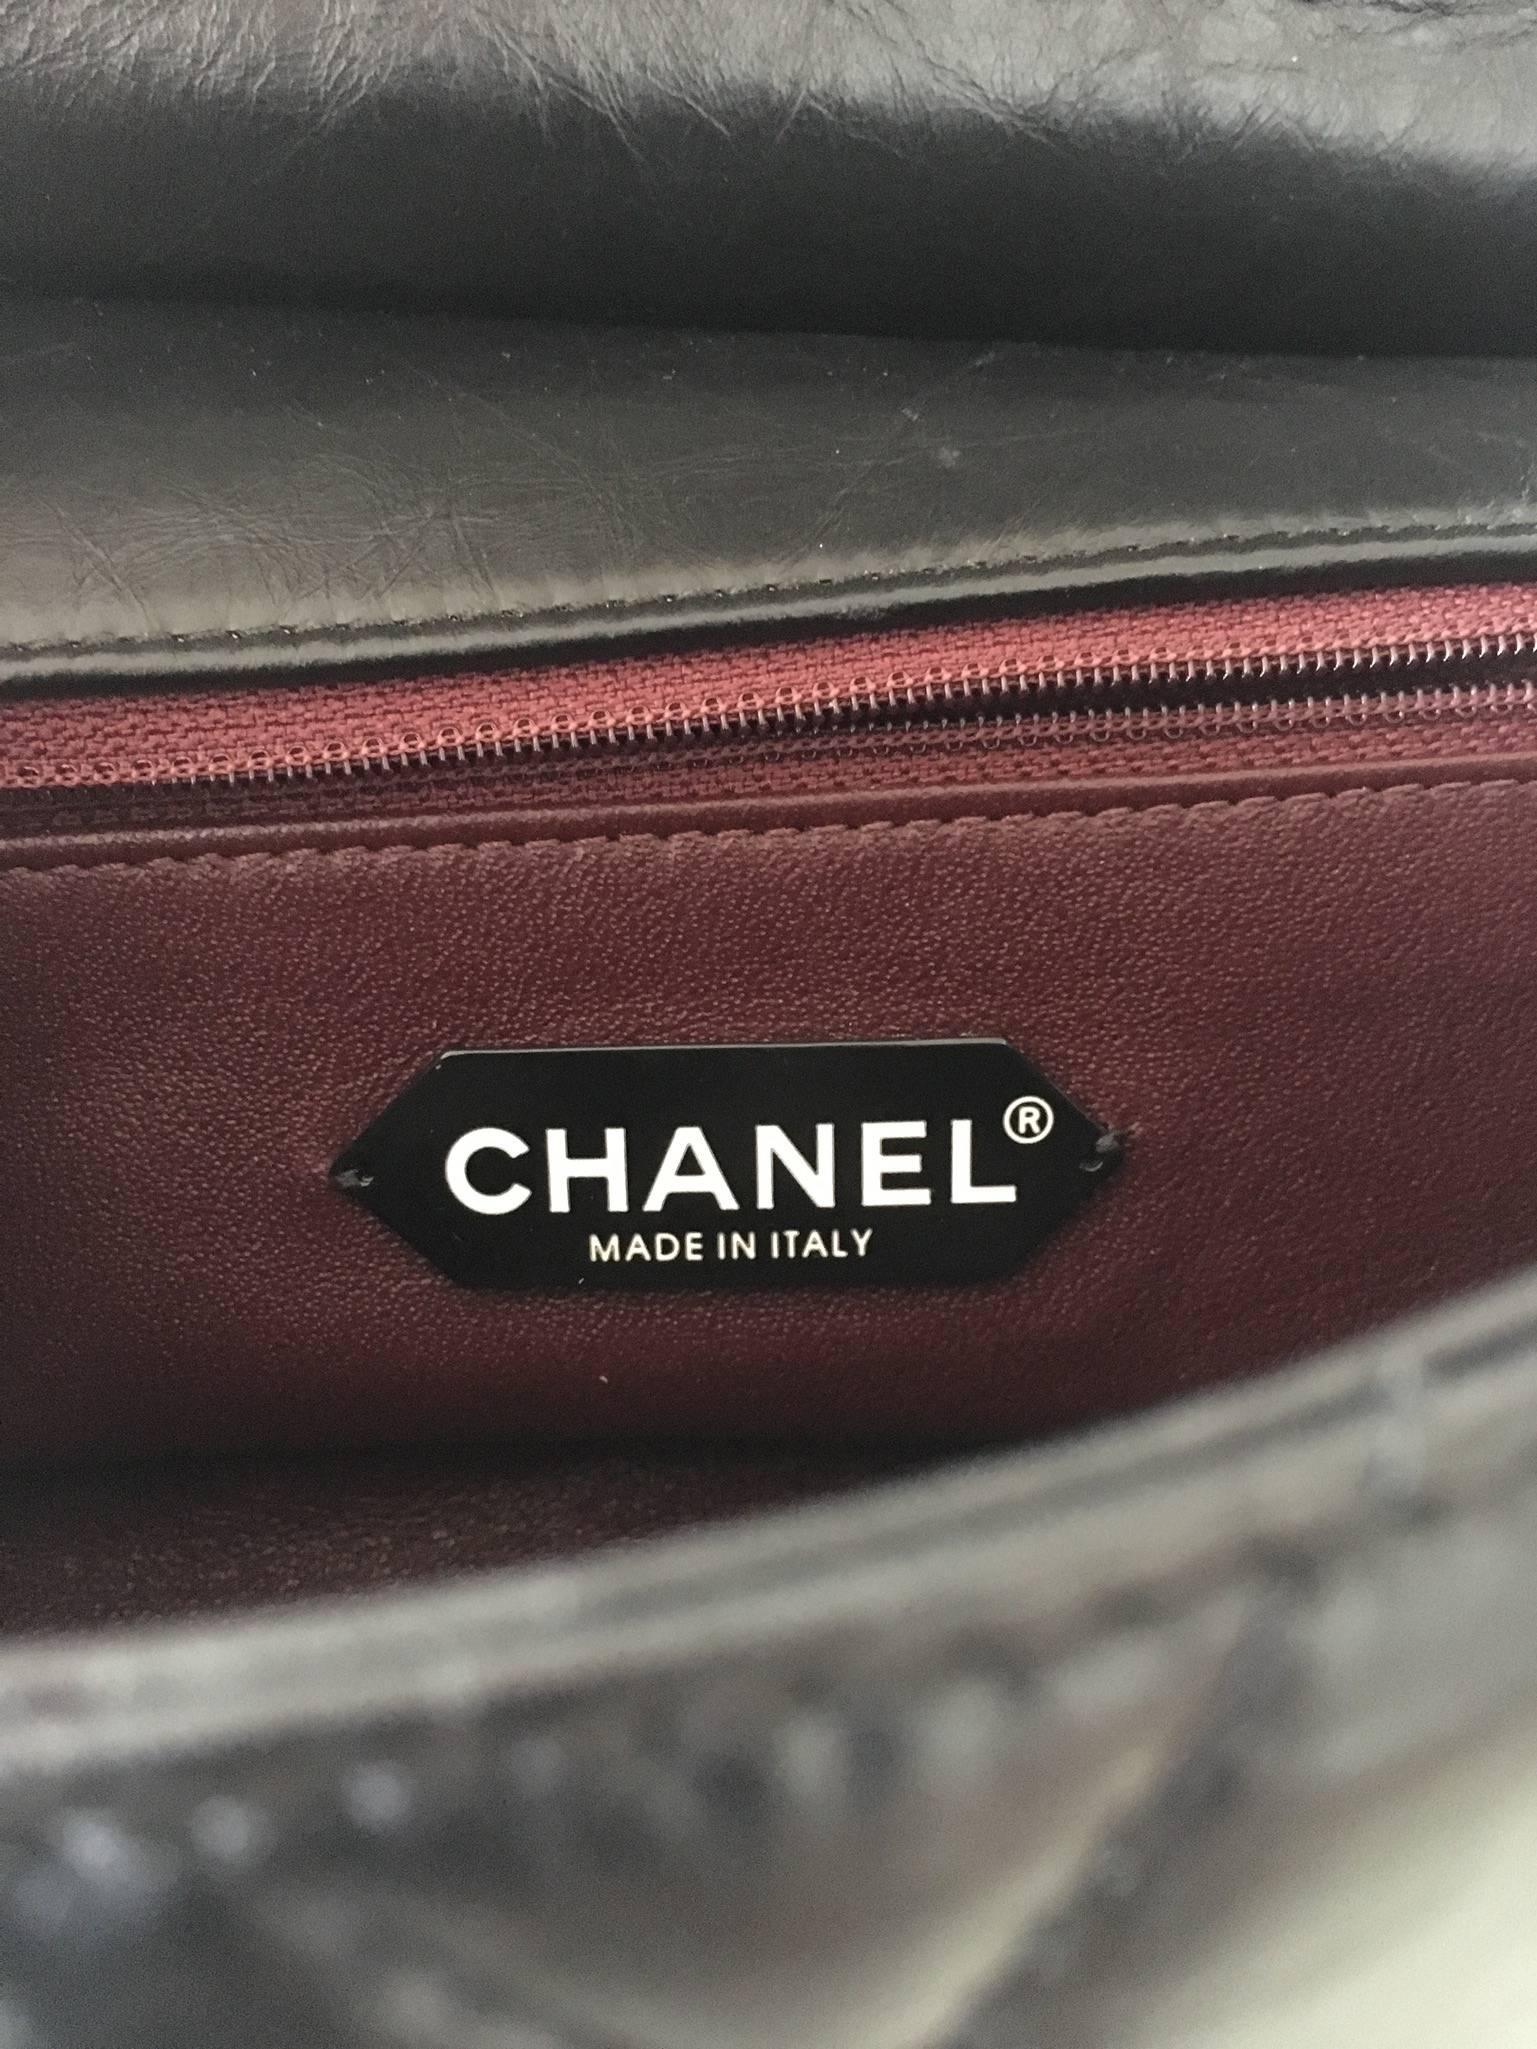 Chanel Runway 2015 model 3